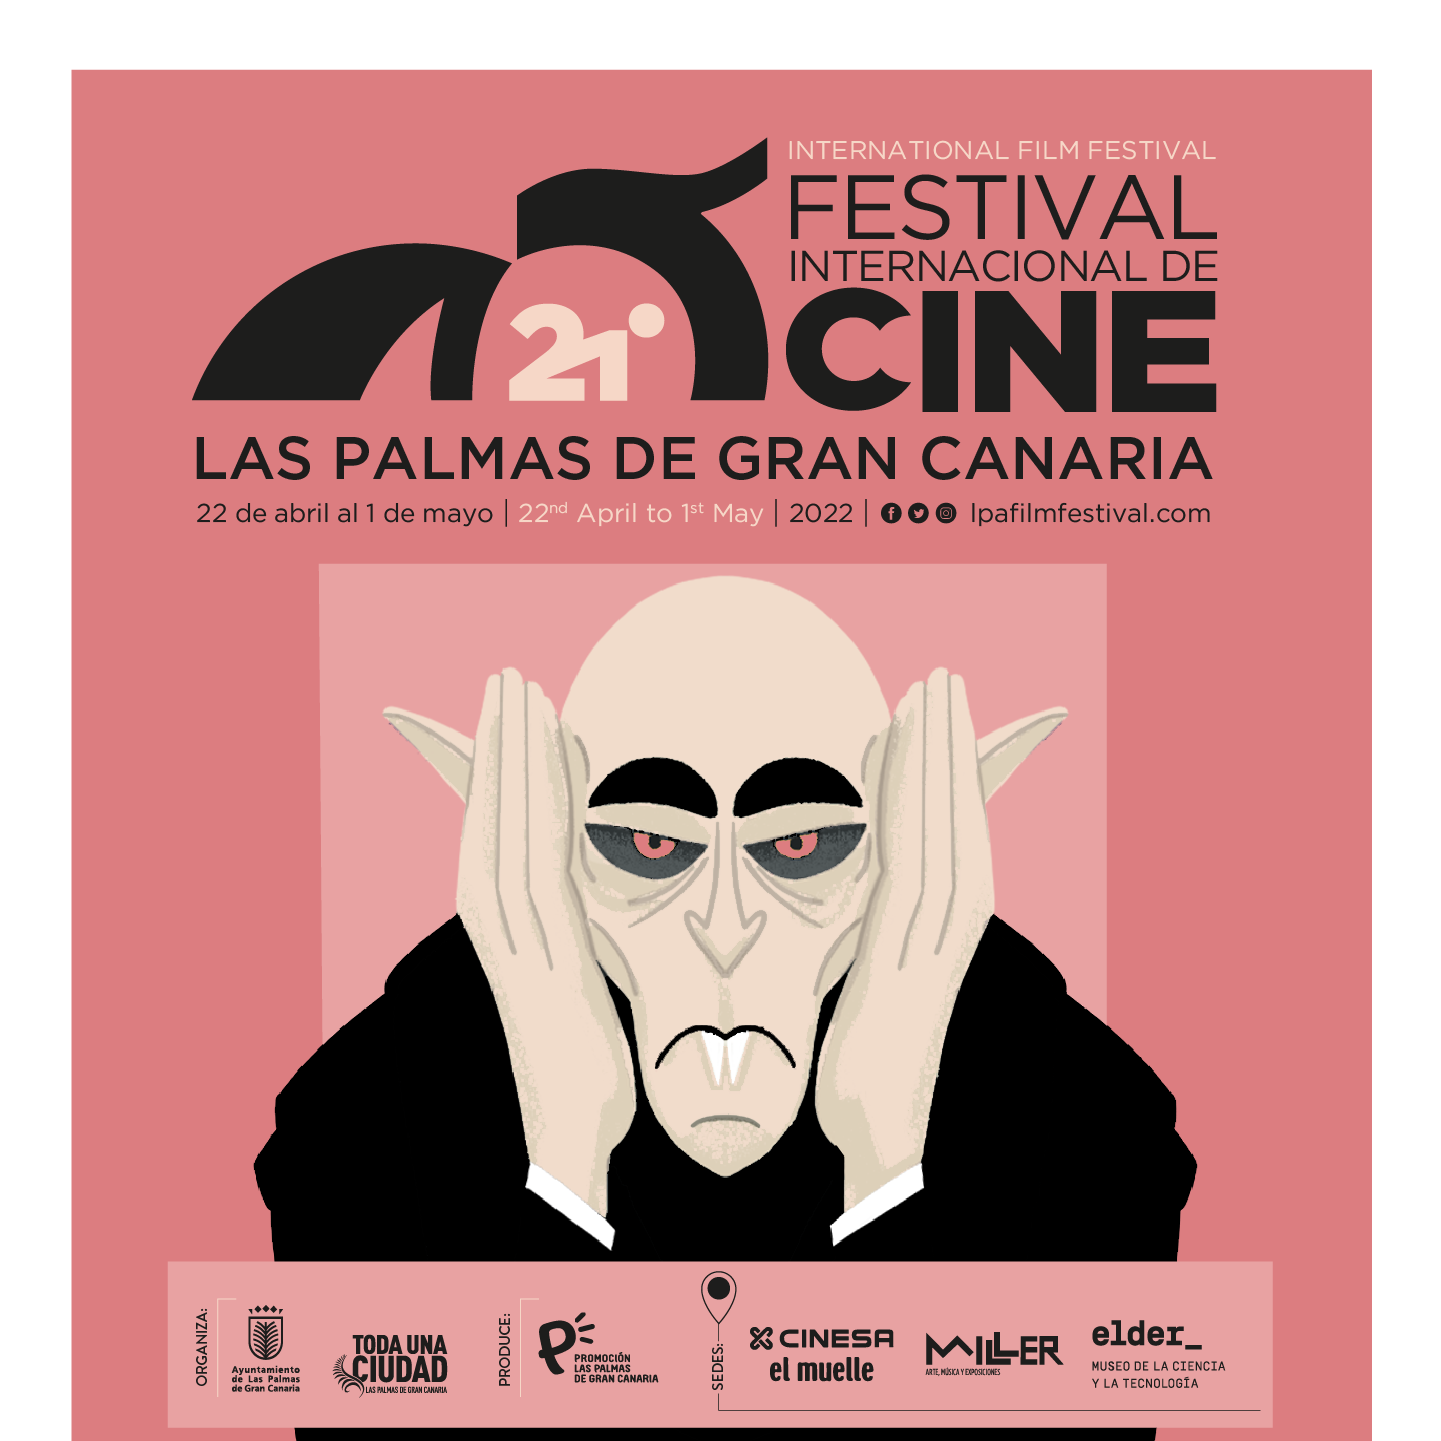 Ota selvää 77+ imagen las palmas de gran canaria international film festival